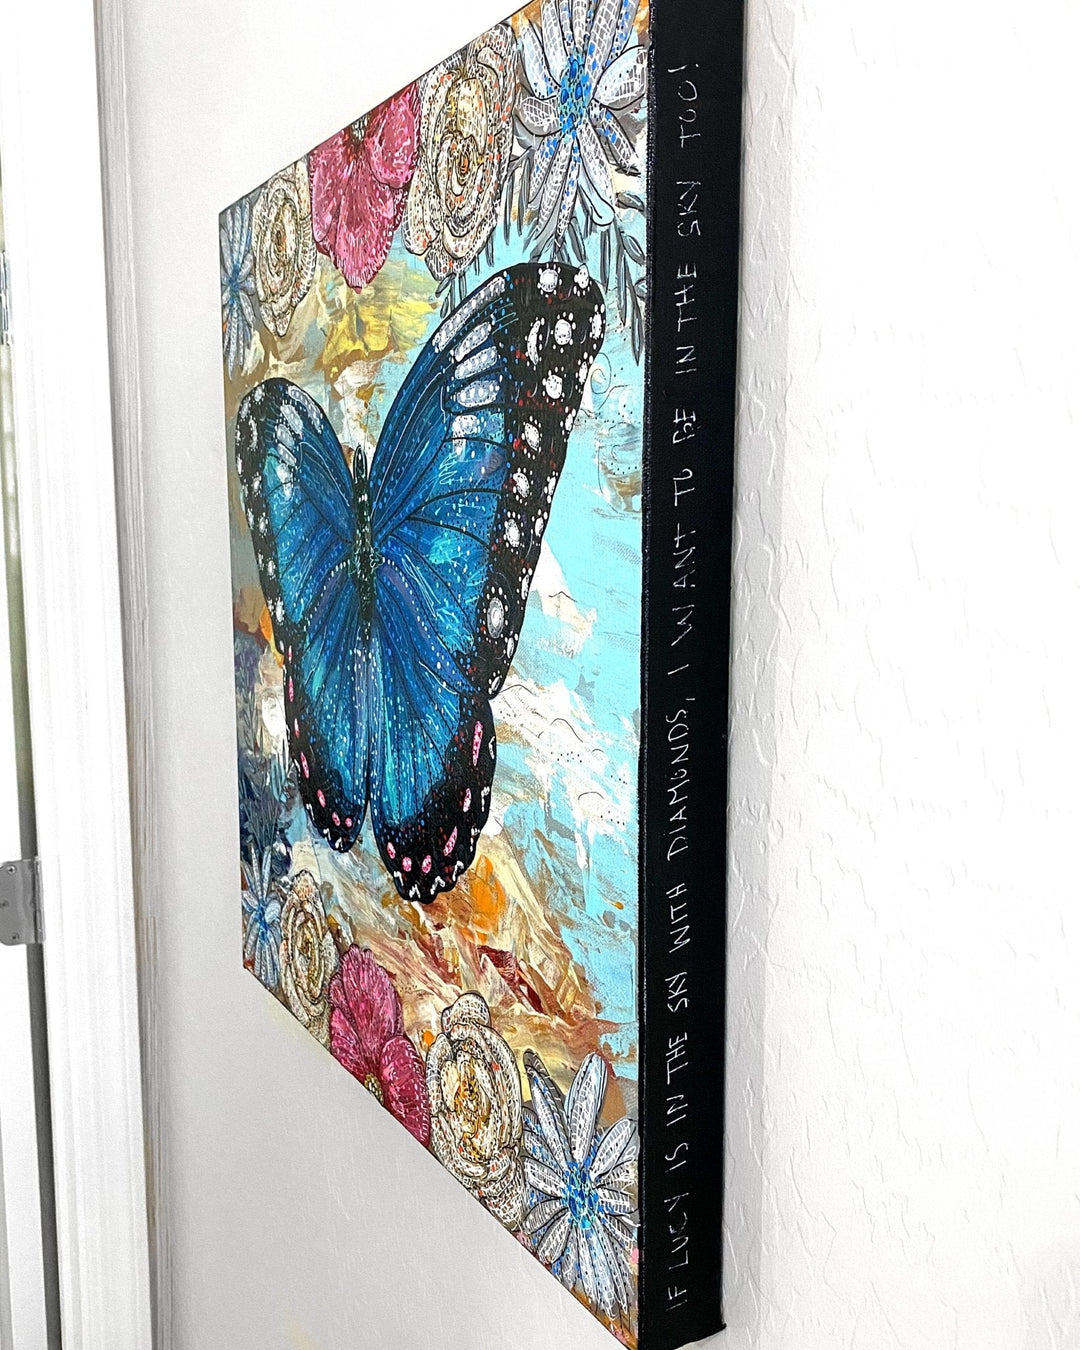 Sky Diamonds Butterfly Floral ( Original Painting ) - Heather Freitas - fine art home deccor